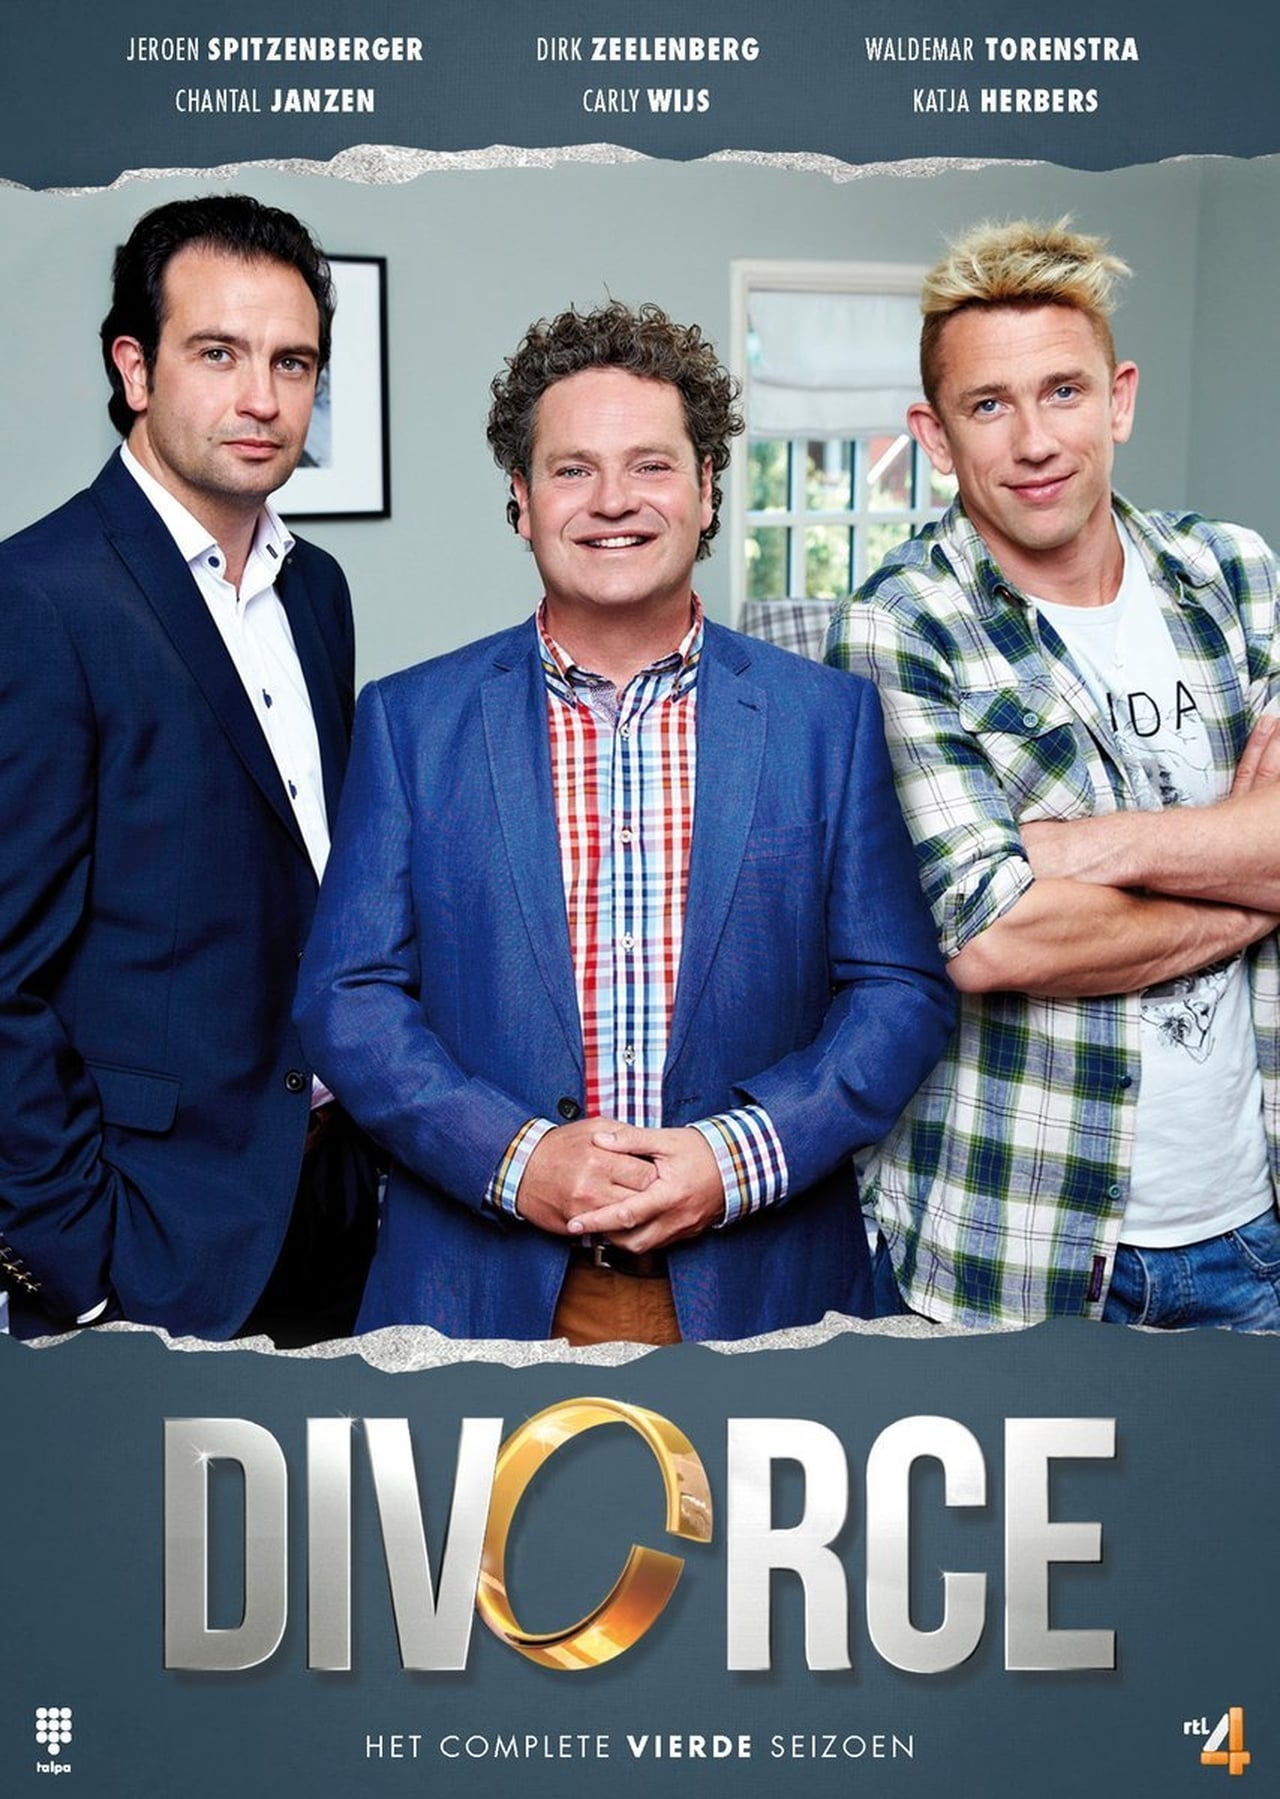 Divorce (2016)